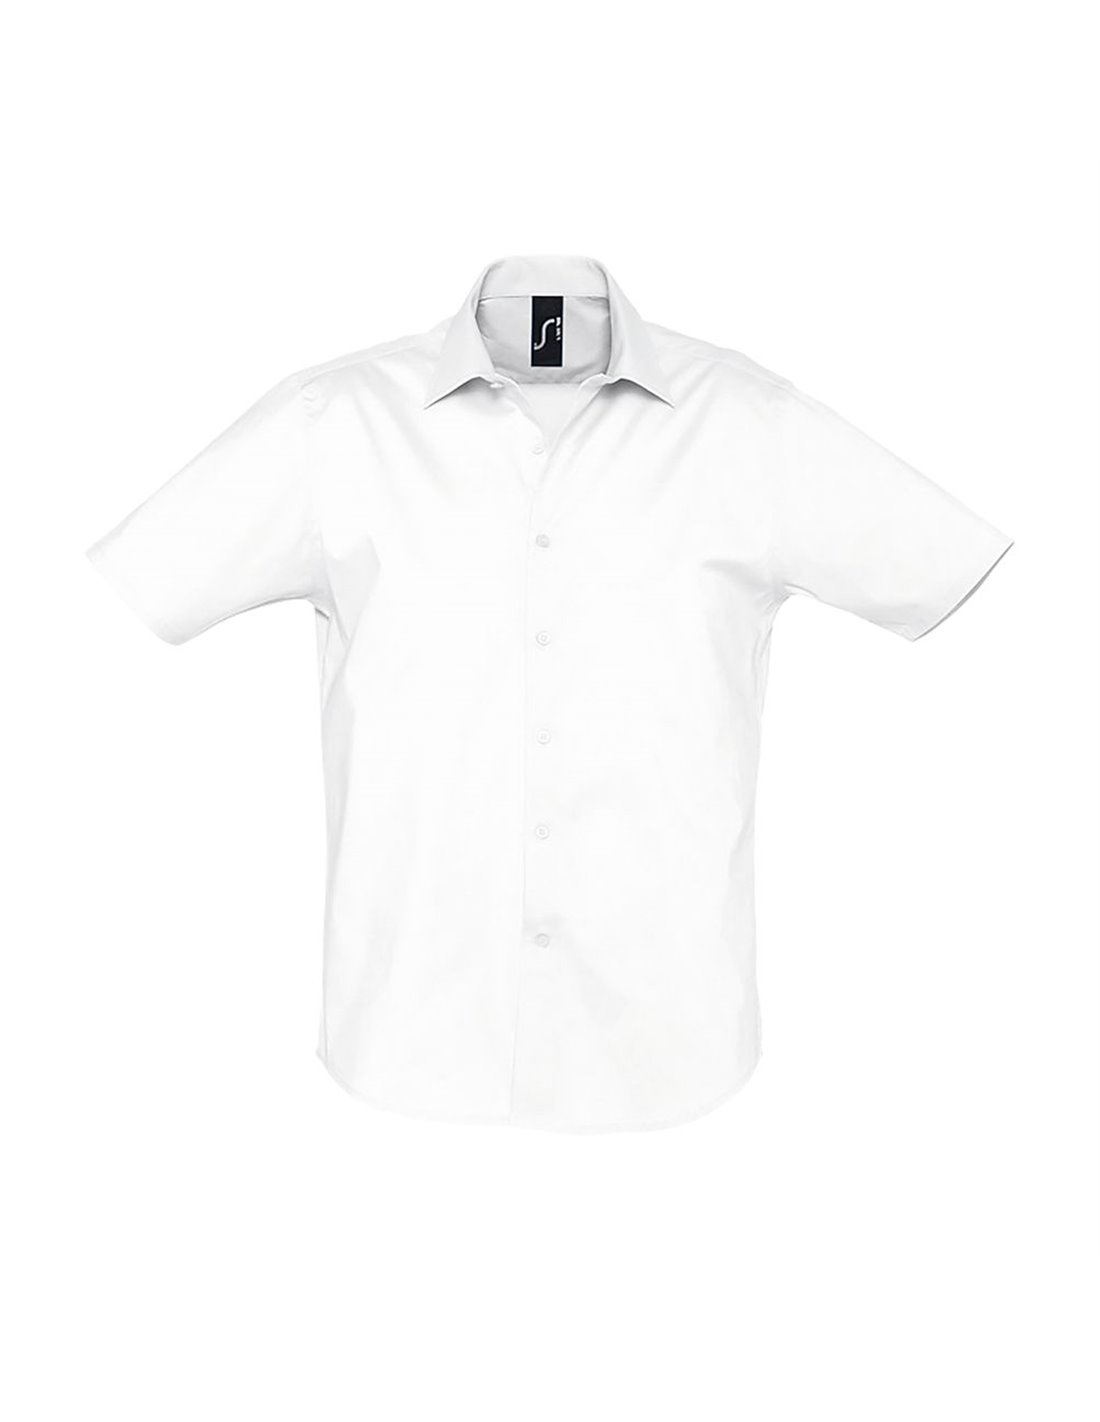 Купить белую рубашку с коротким рукавом. 99051-21vm мужская рубашка. Мужская белая рубашка. Белая рубашка с коротким рукавом. Белая рубашка с коротким рукавом мужская.